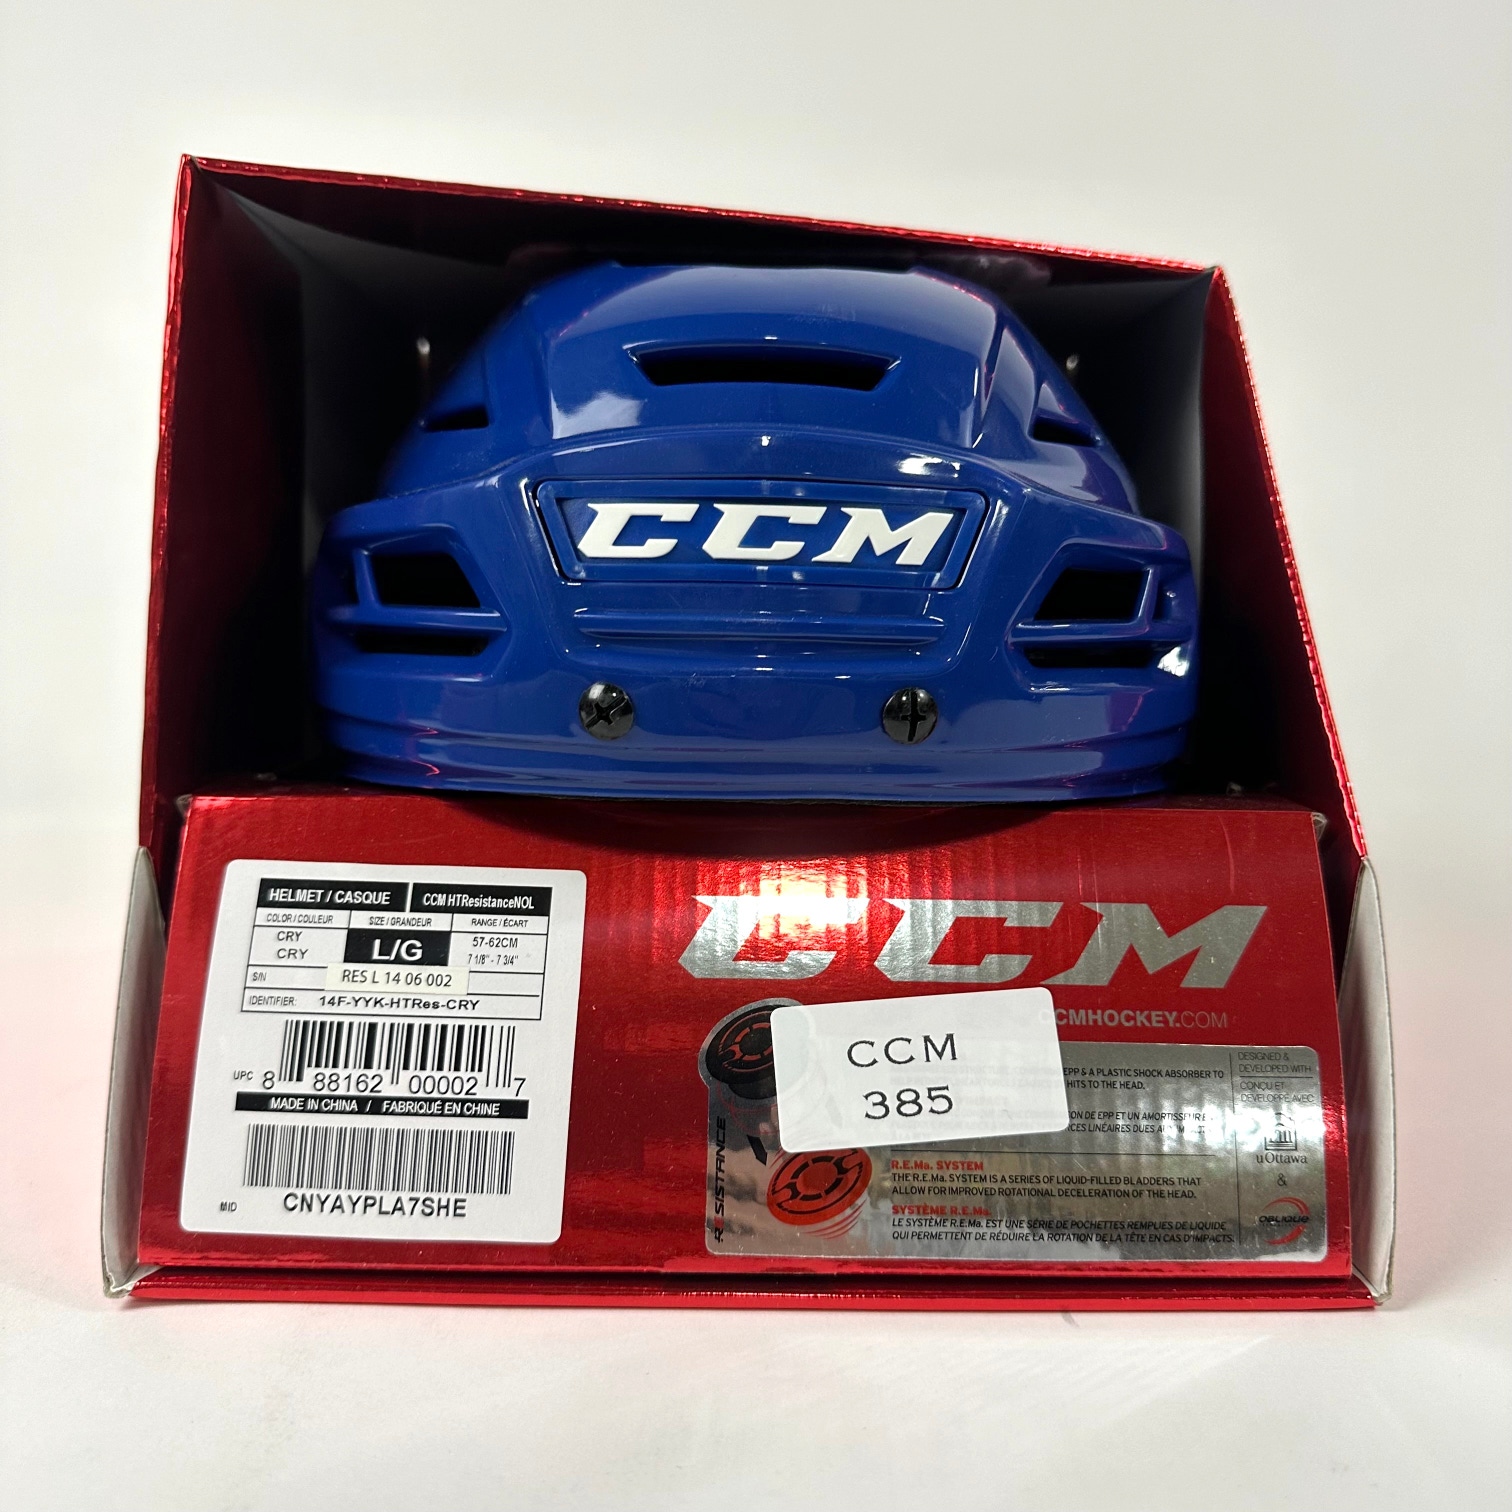 Brand New CCM Resistance Helmet in Box - Royal Blue - Large #CCM385